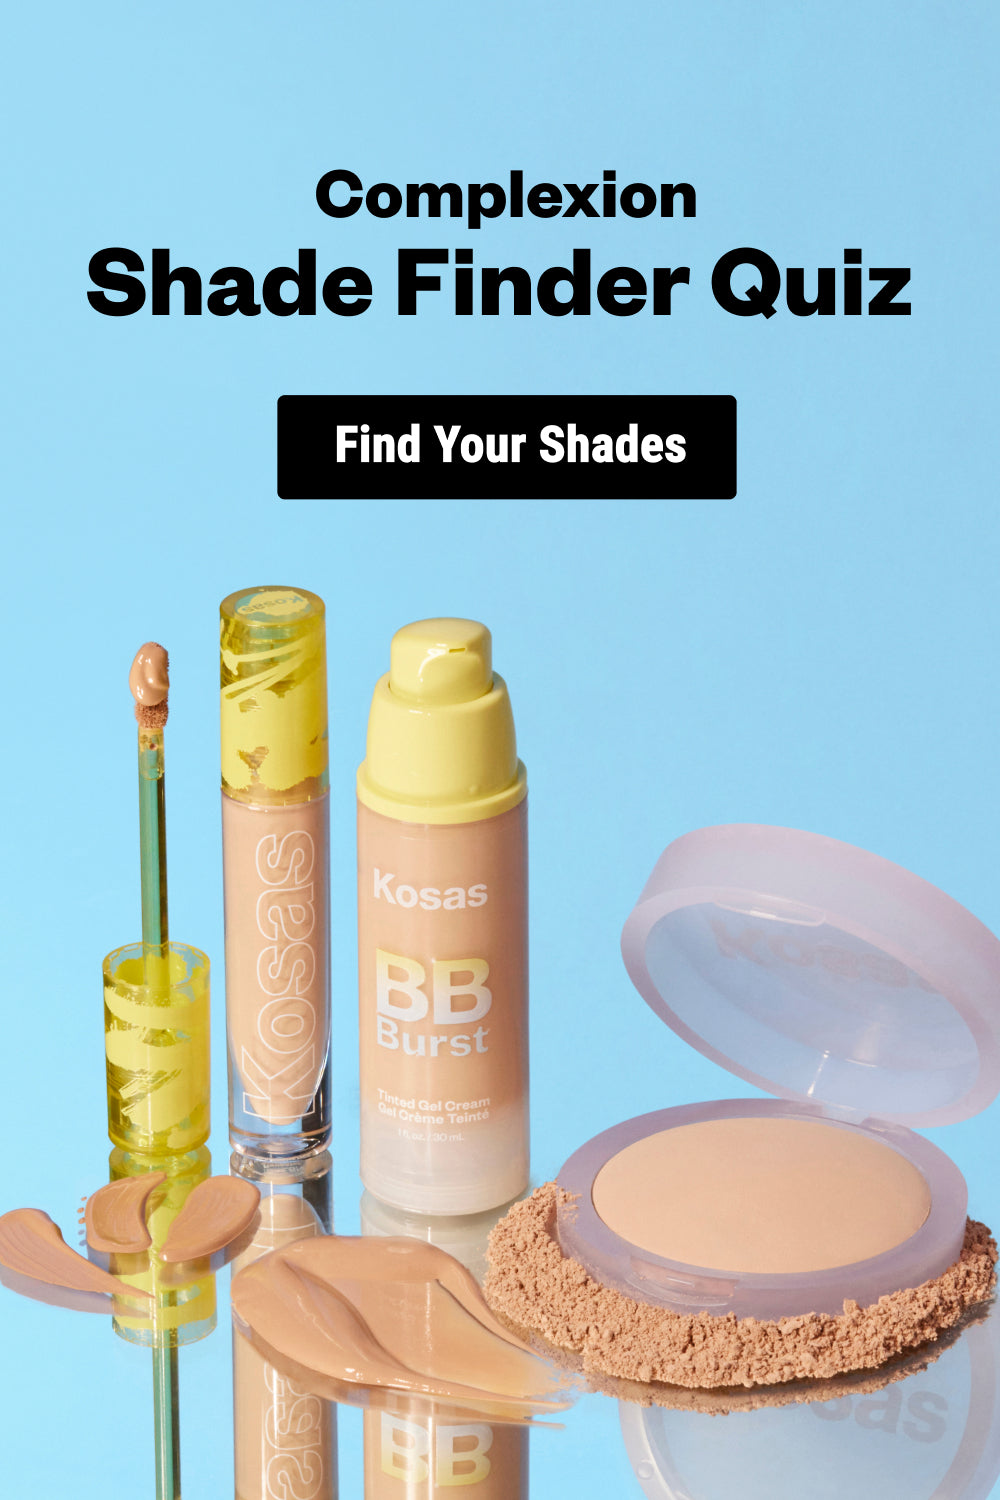 Complexion Shade Finder Quiz - Find Your Shades